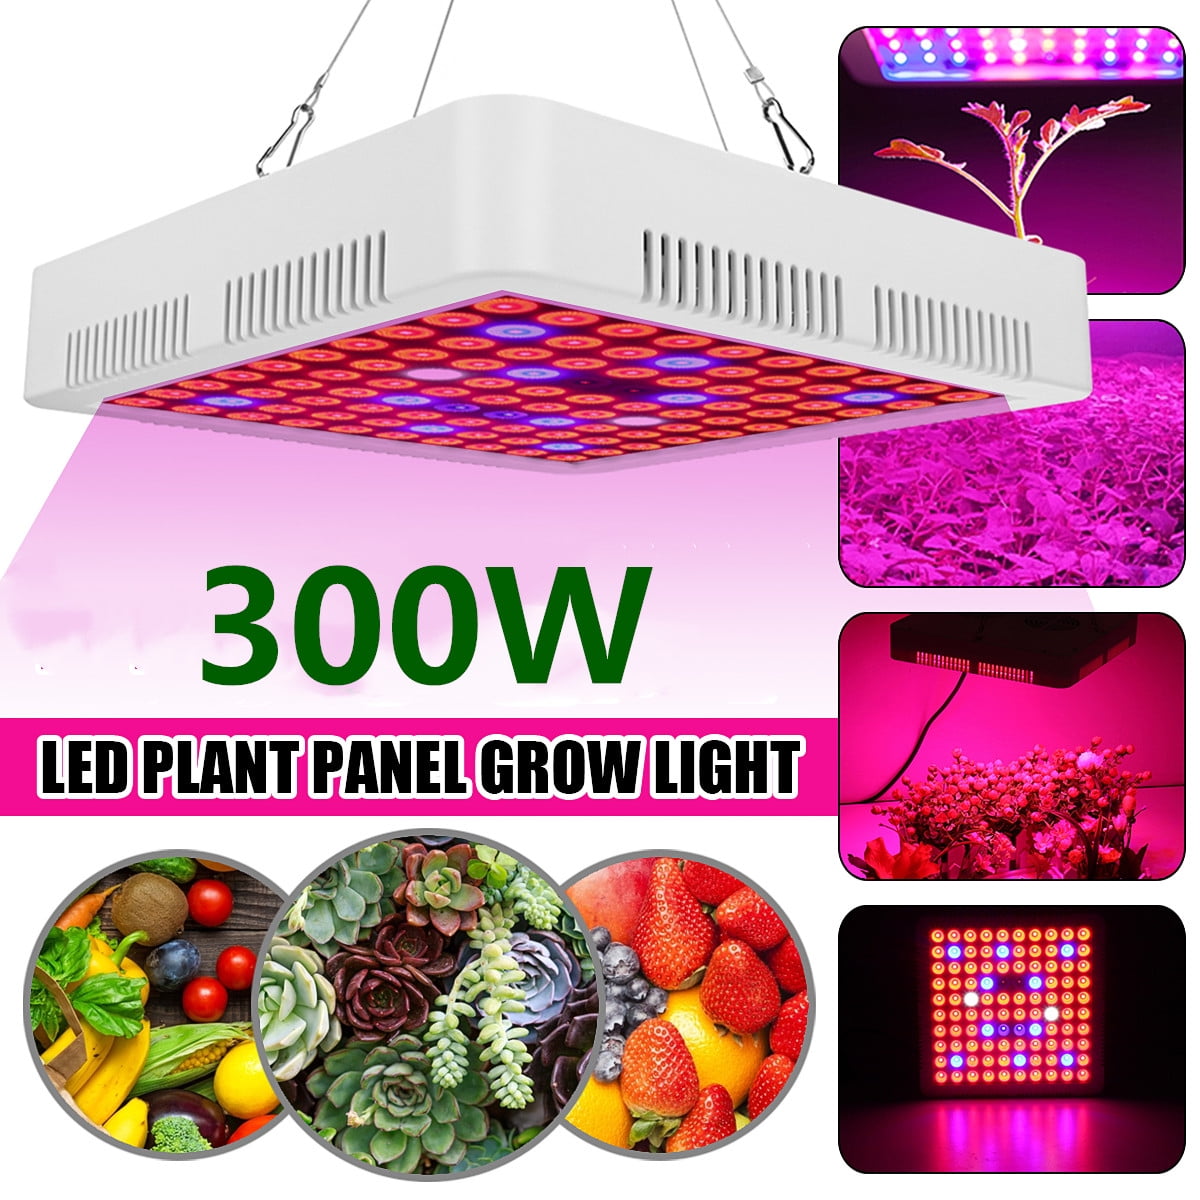 Details about   LED Grow Light Full Spectrum Panel Plant Light Lamp with IR&UV For Plants Flower 